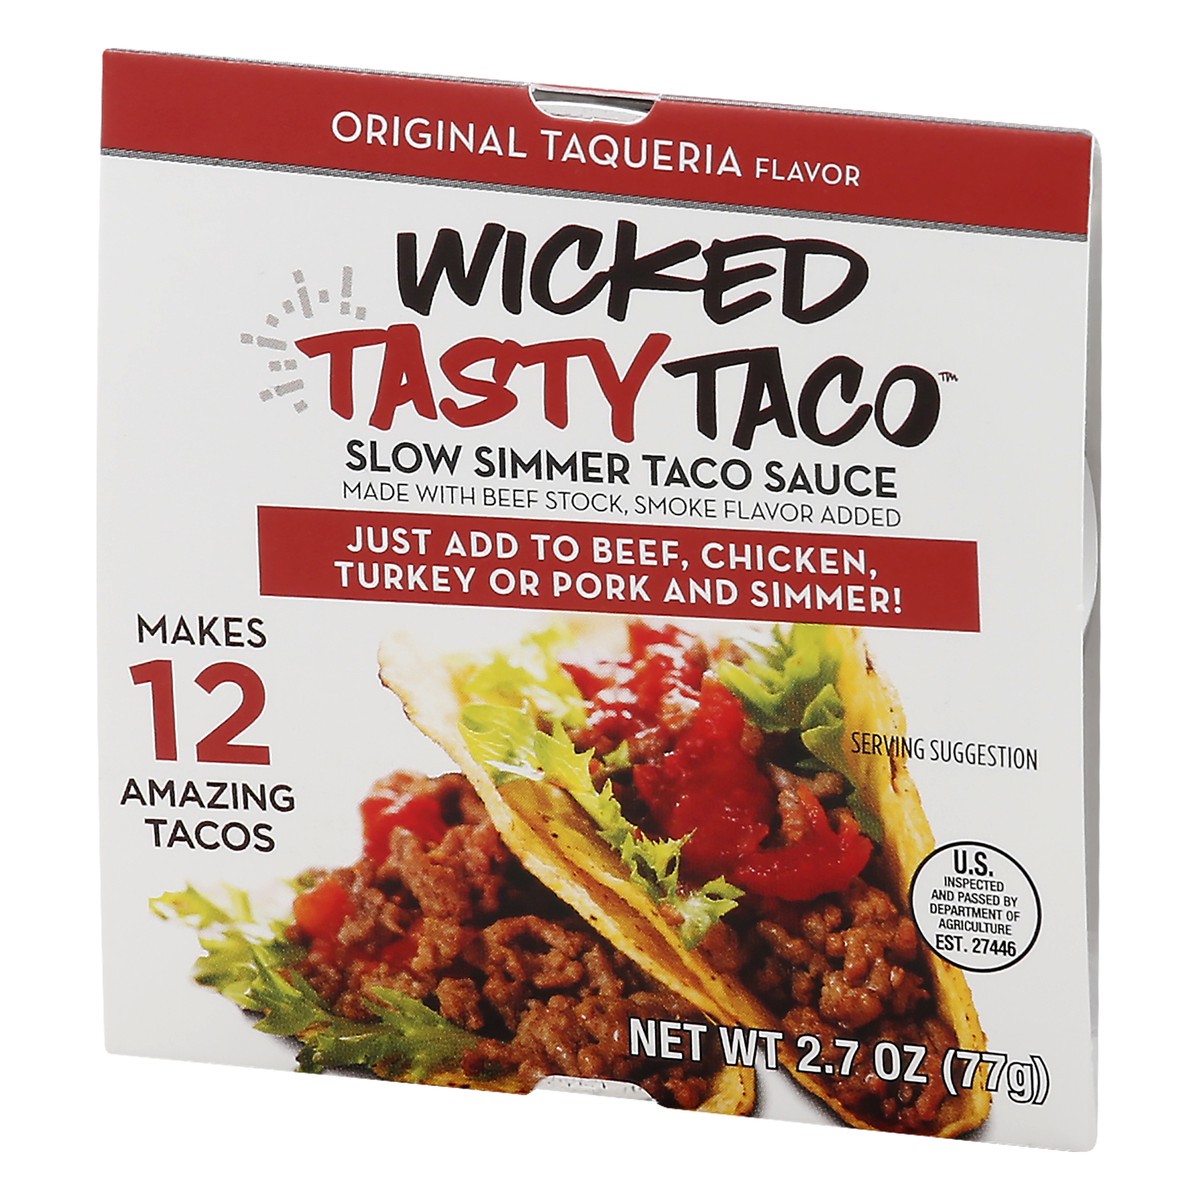 slide 8 of 13, Wicked Tasty Taco Slow Simmer Original Taqueria Flavor Taco Sauce 2.7 oz, 2.7 oz